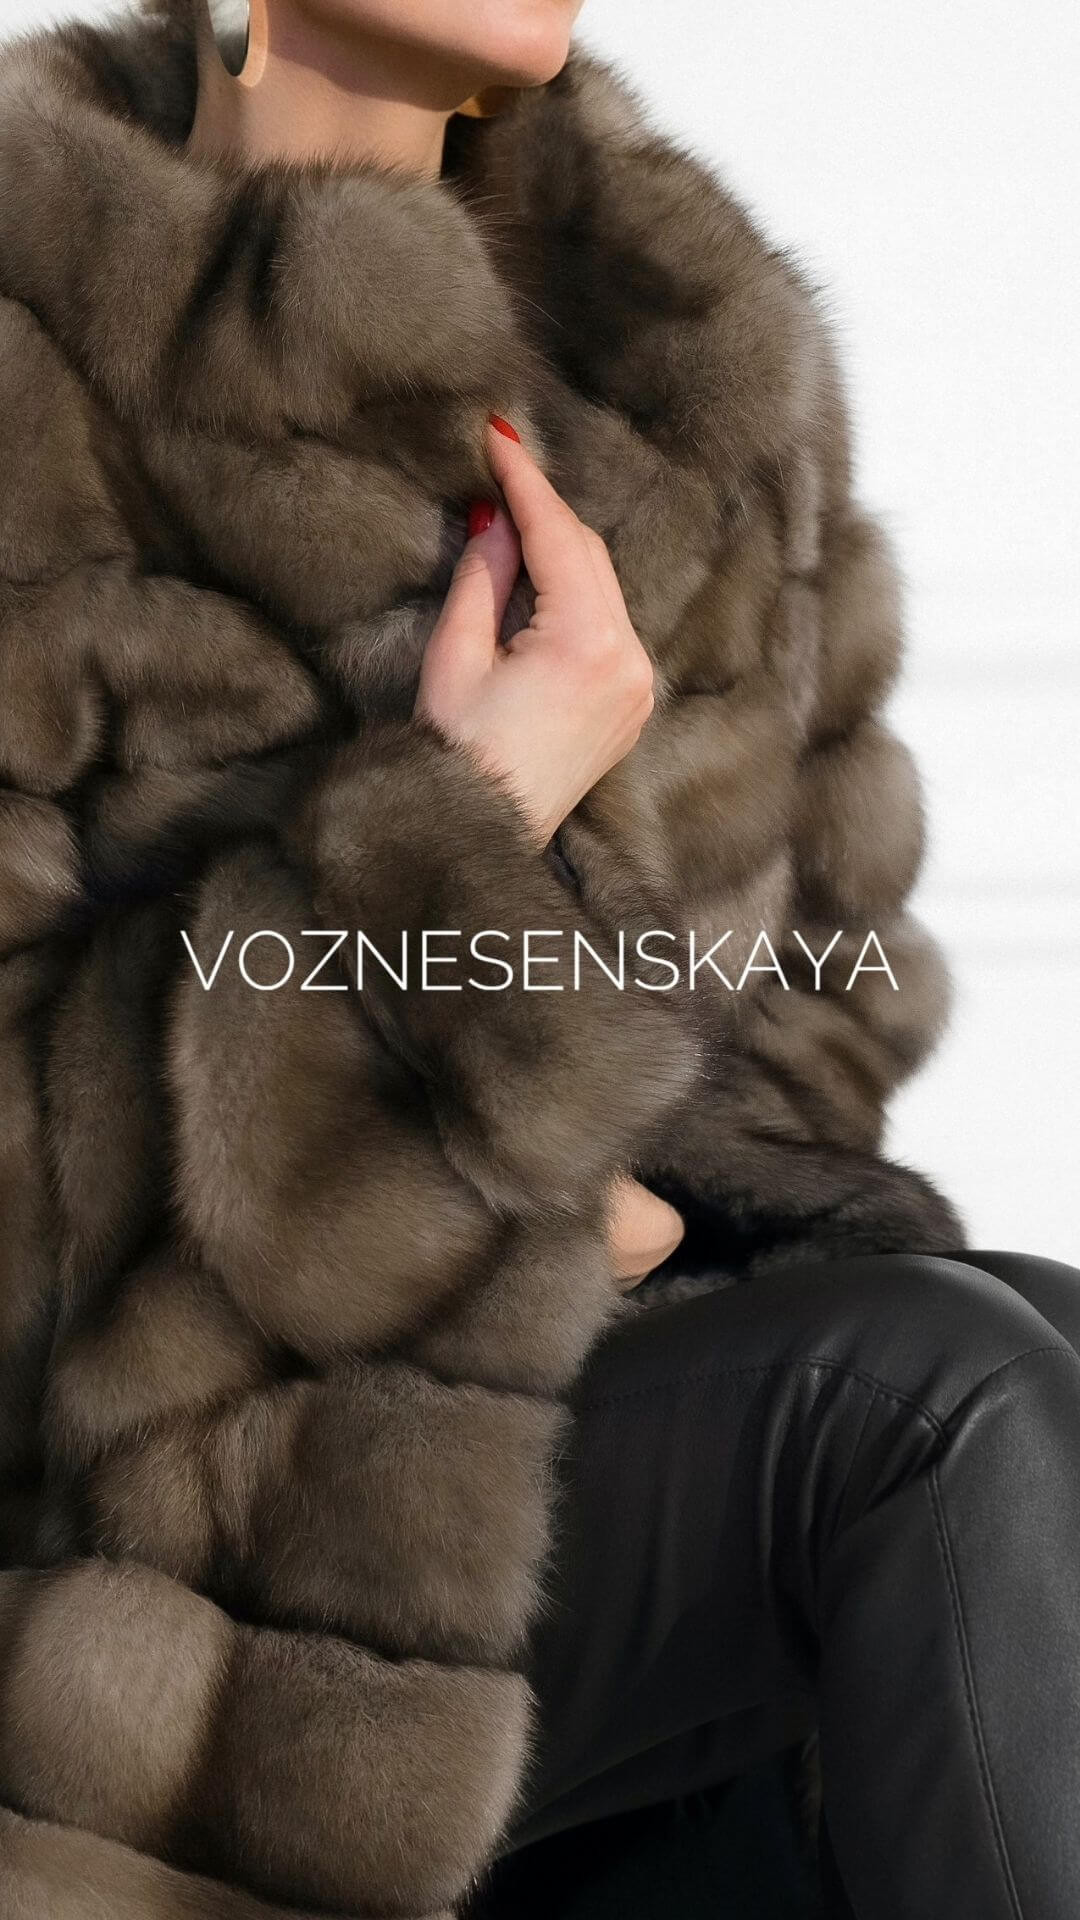 Alter an old fur coat